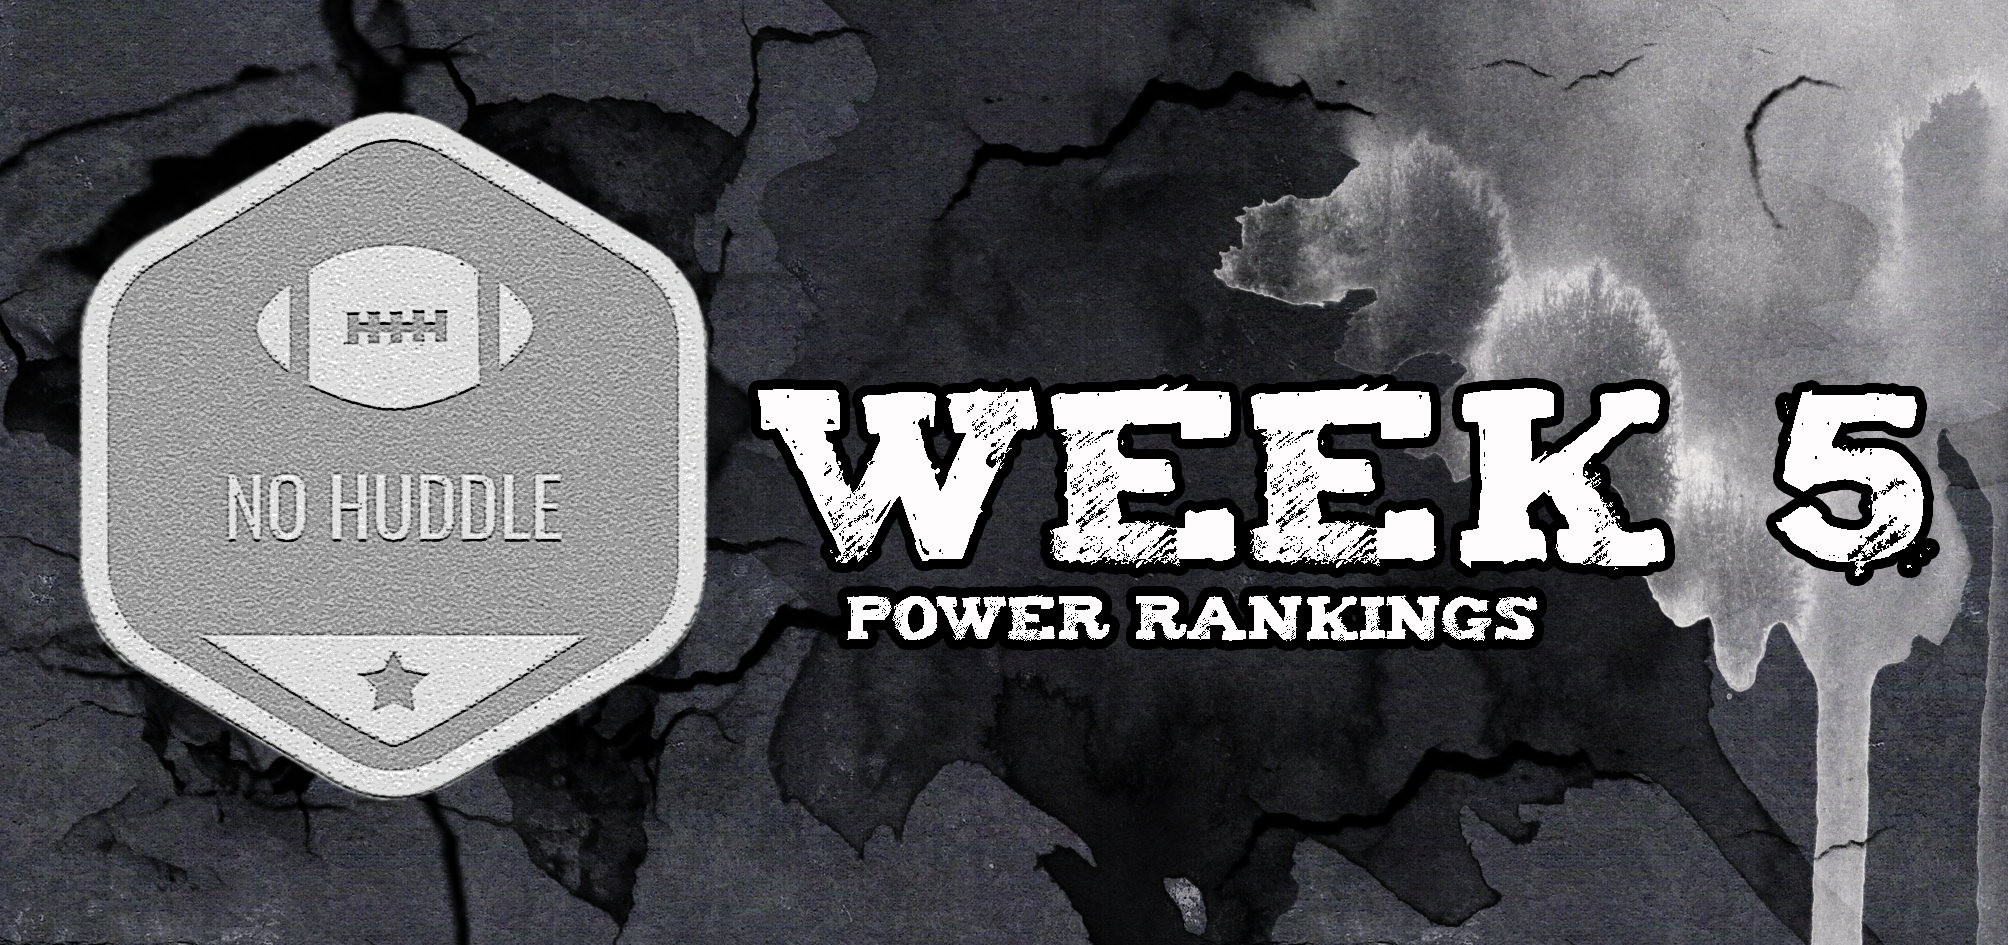 Power Rankings: Semana 5